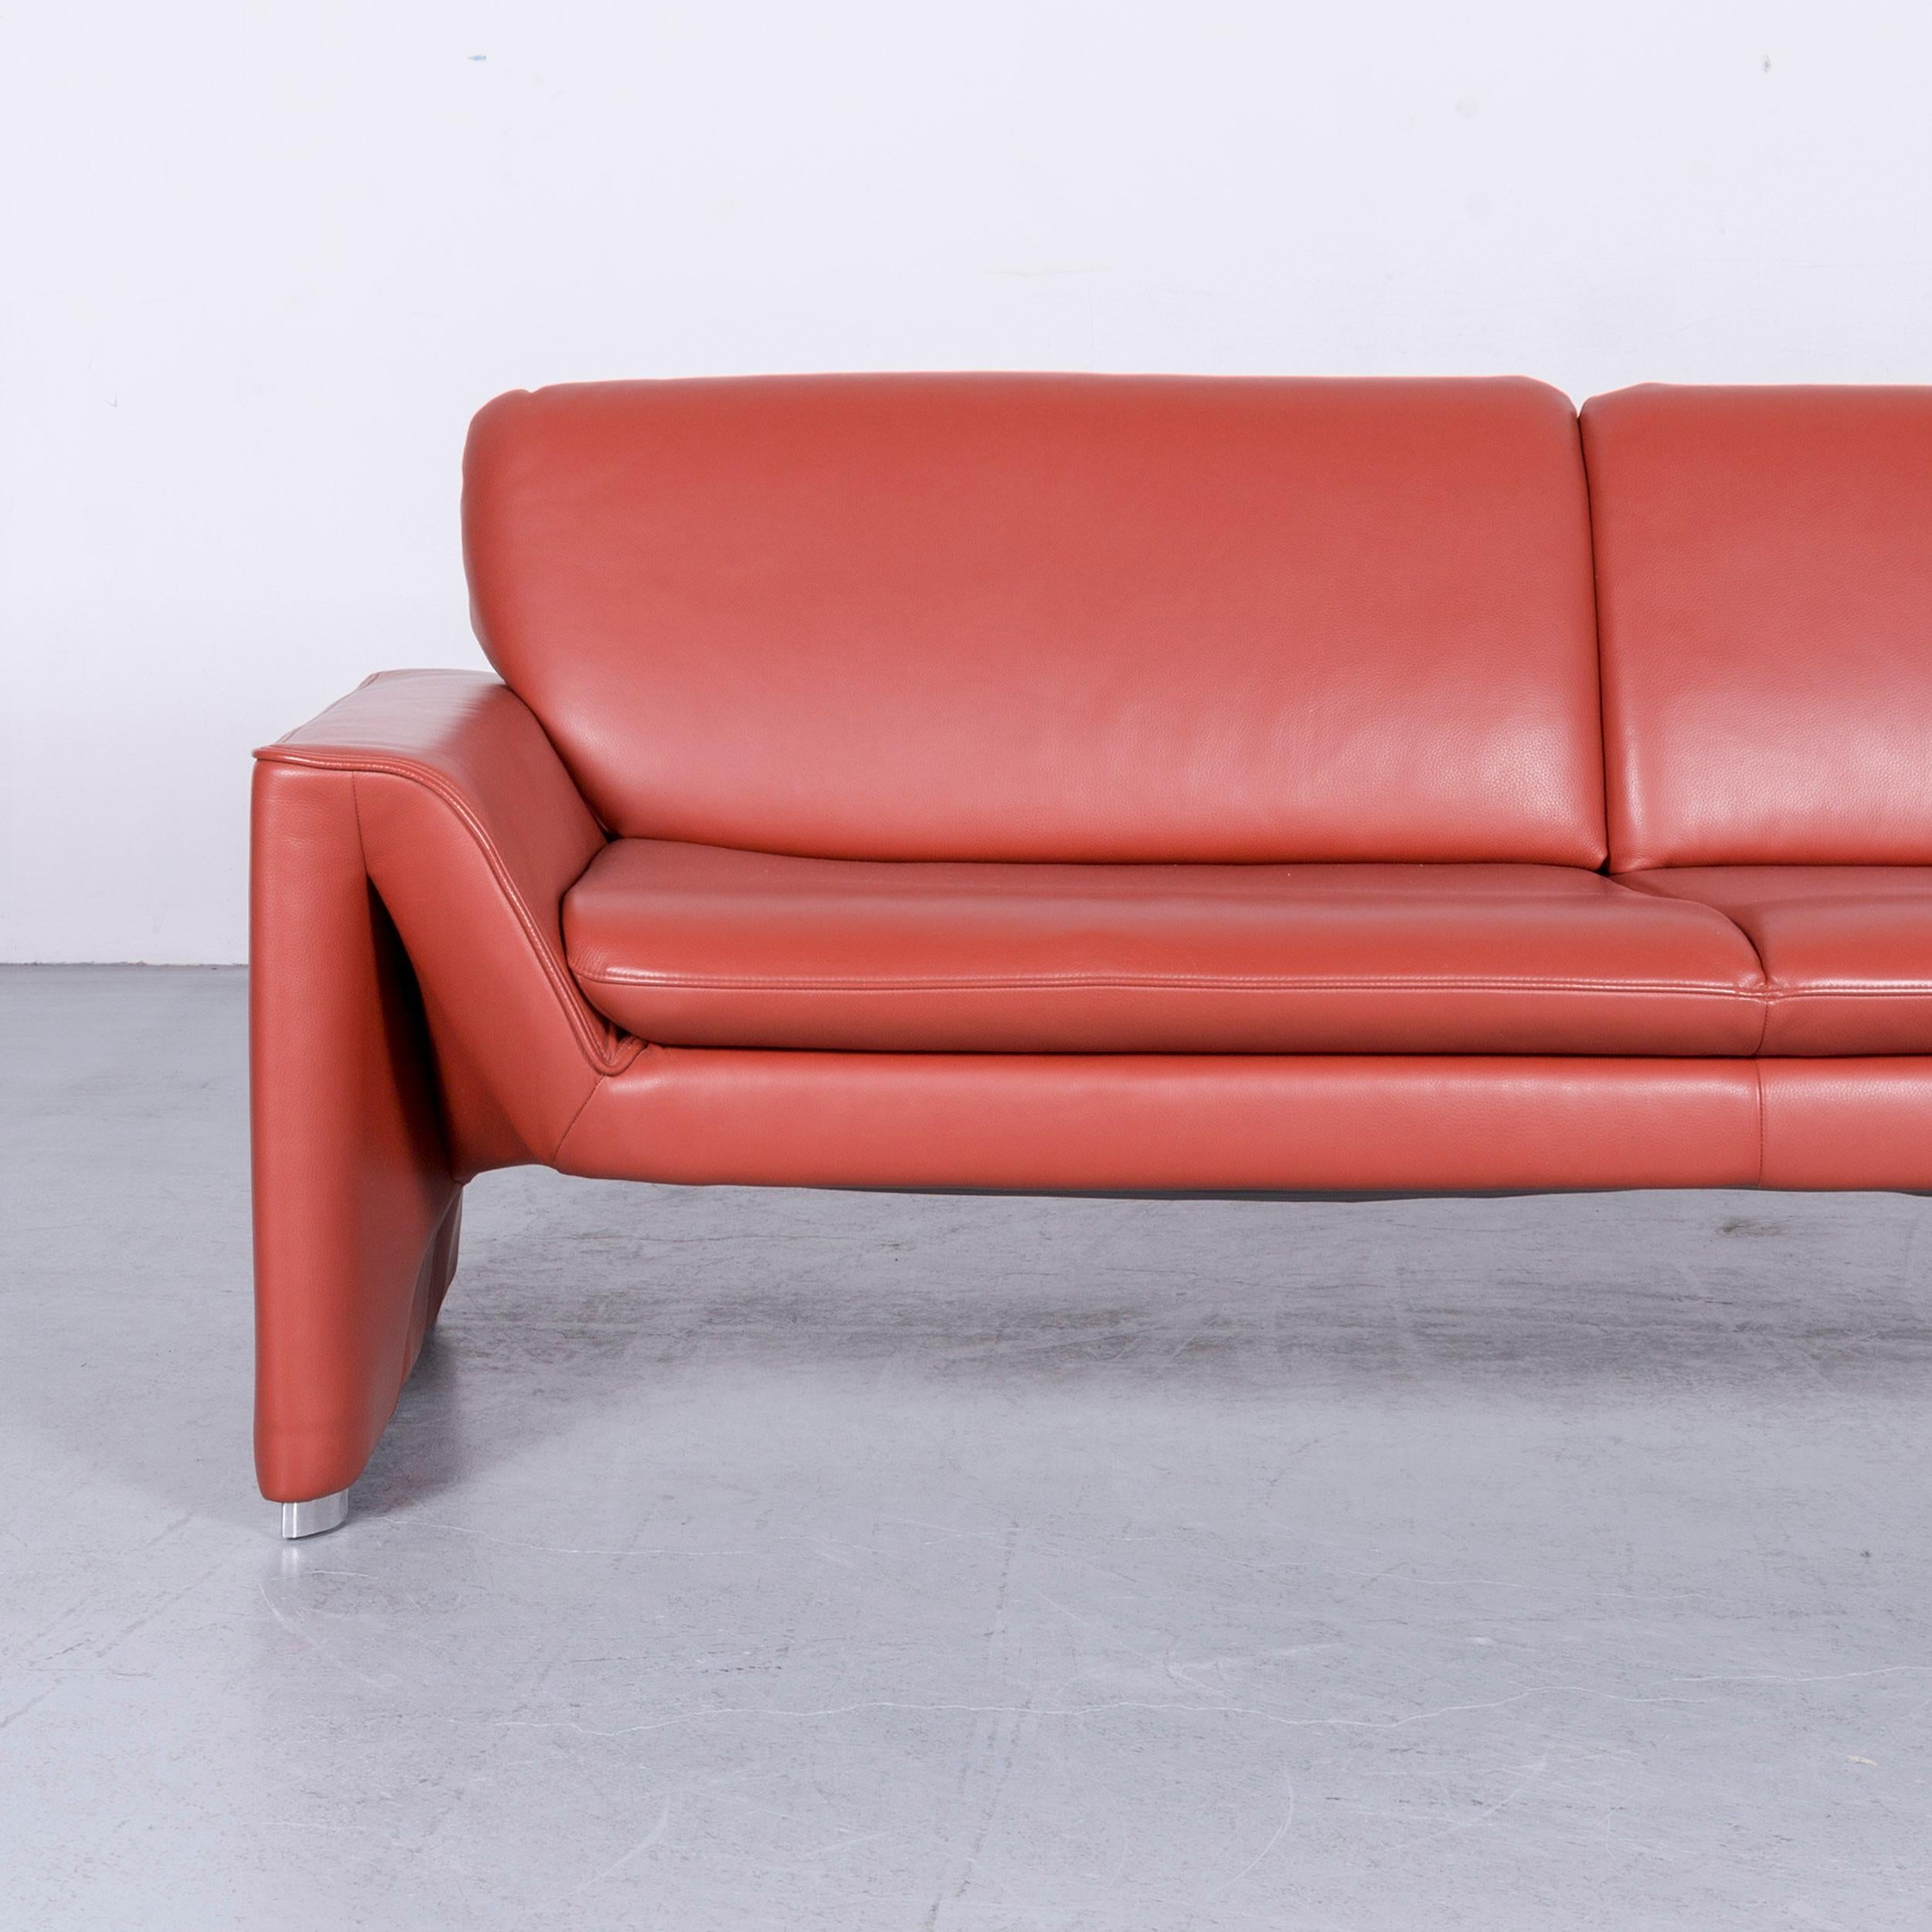 German Laauser Corvus Designer Sofa Corner-Sofa Footstool Set Leather Red Couch